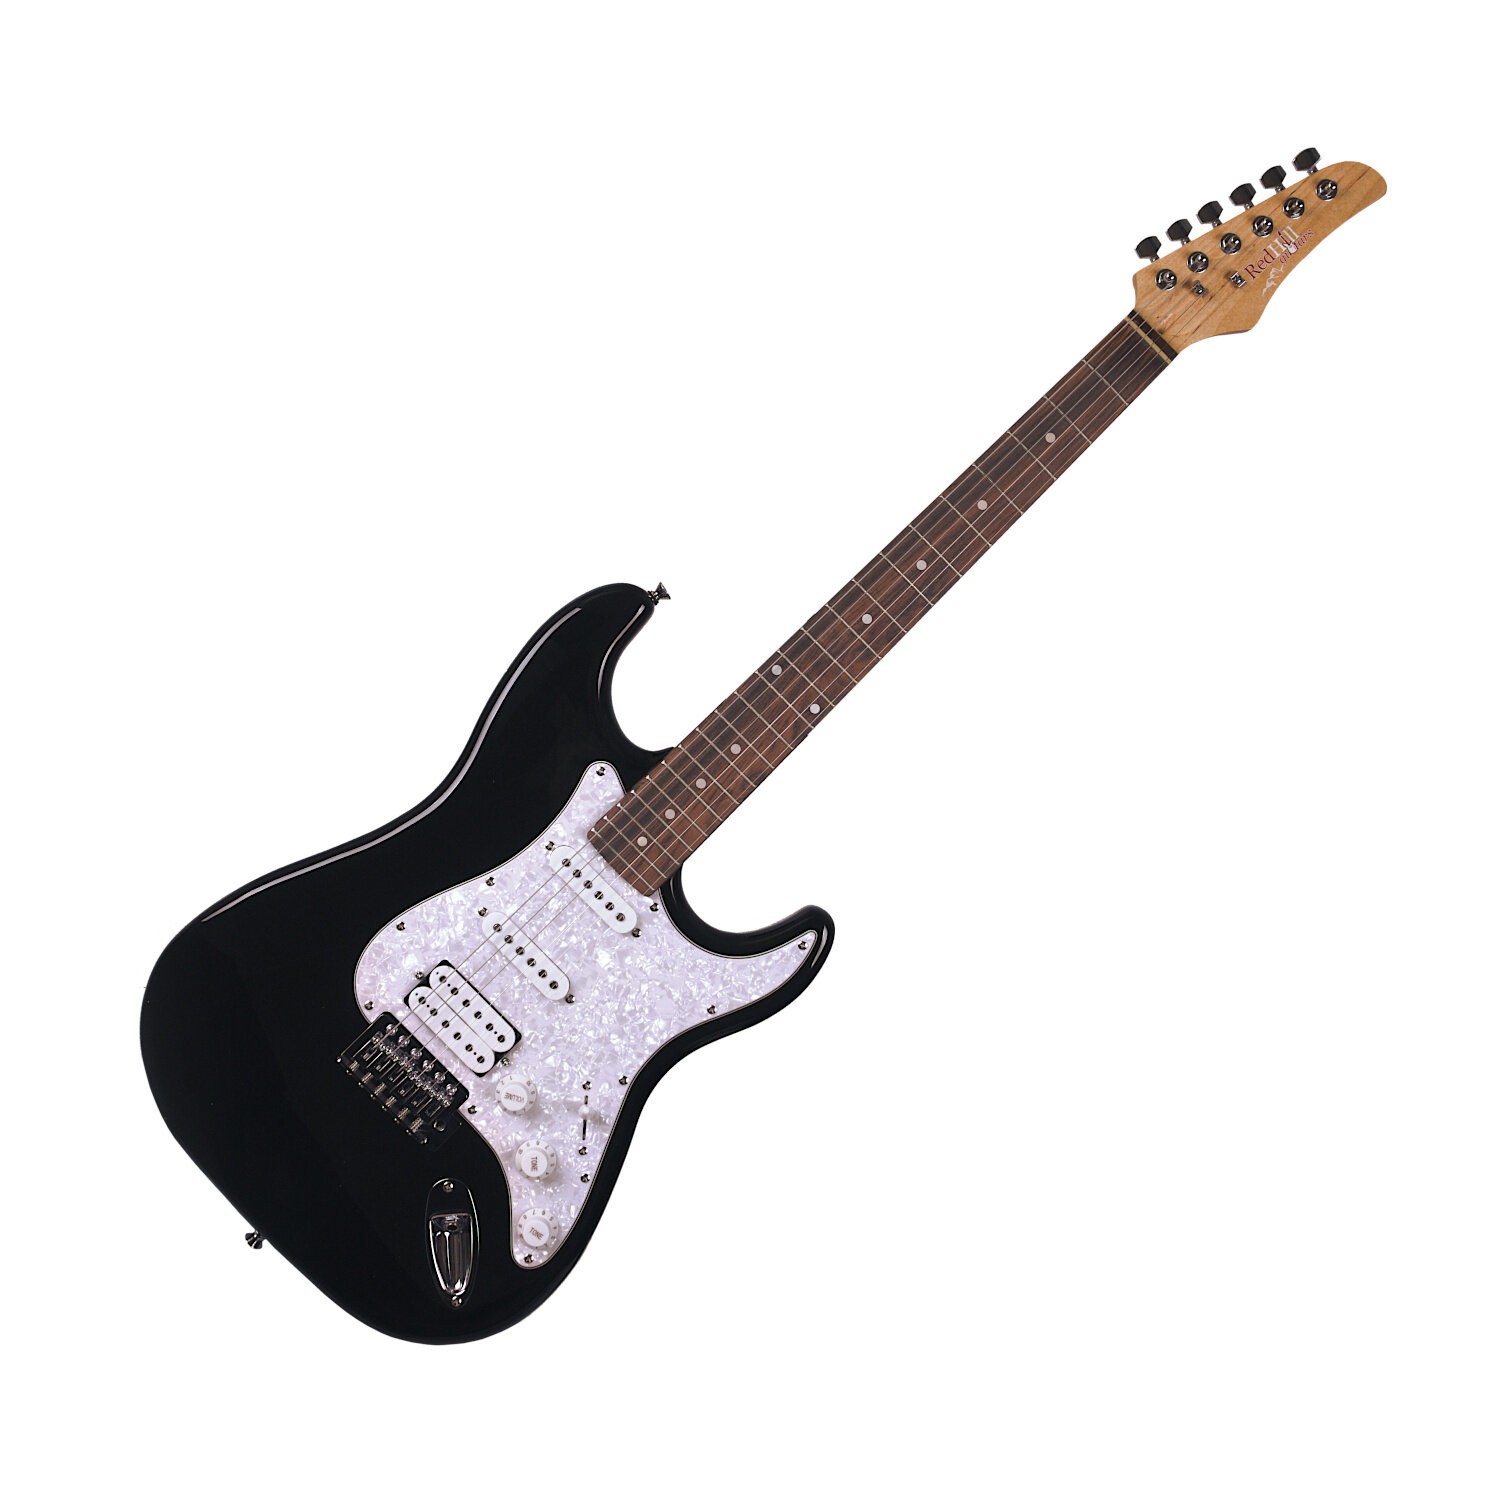 REDHILL STM200 BK - электрогитара Stratocaster S-S-H тополь/клен цвет черный